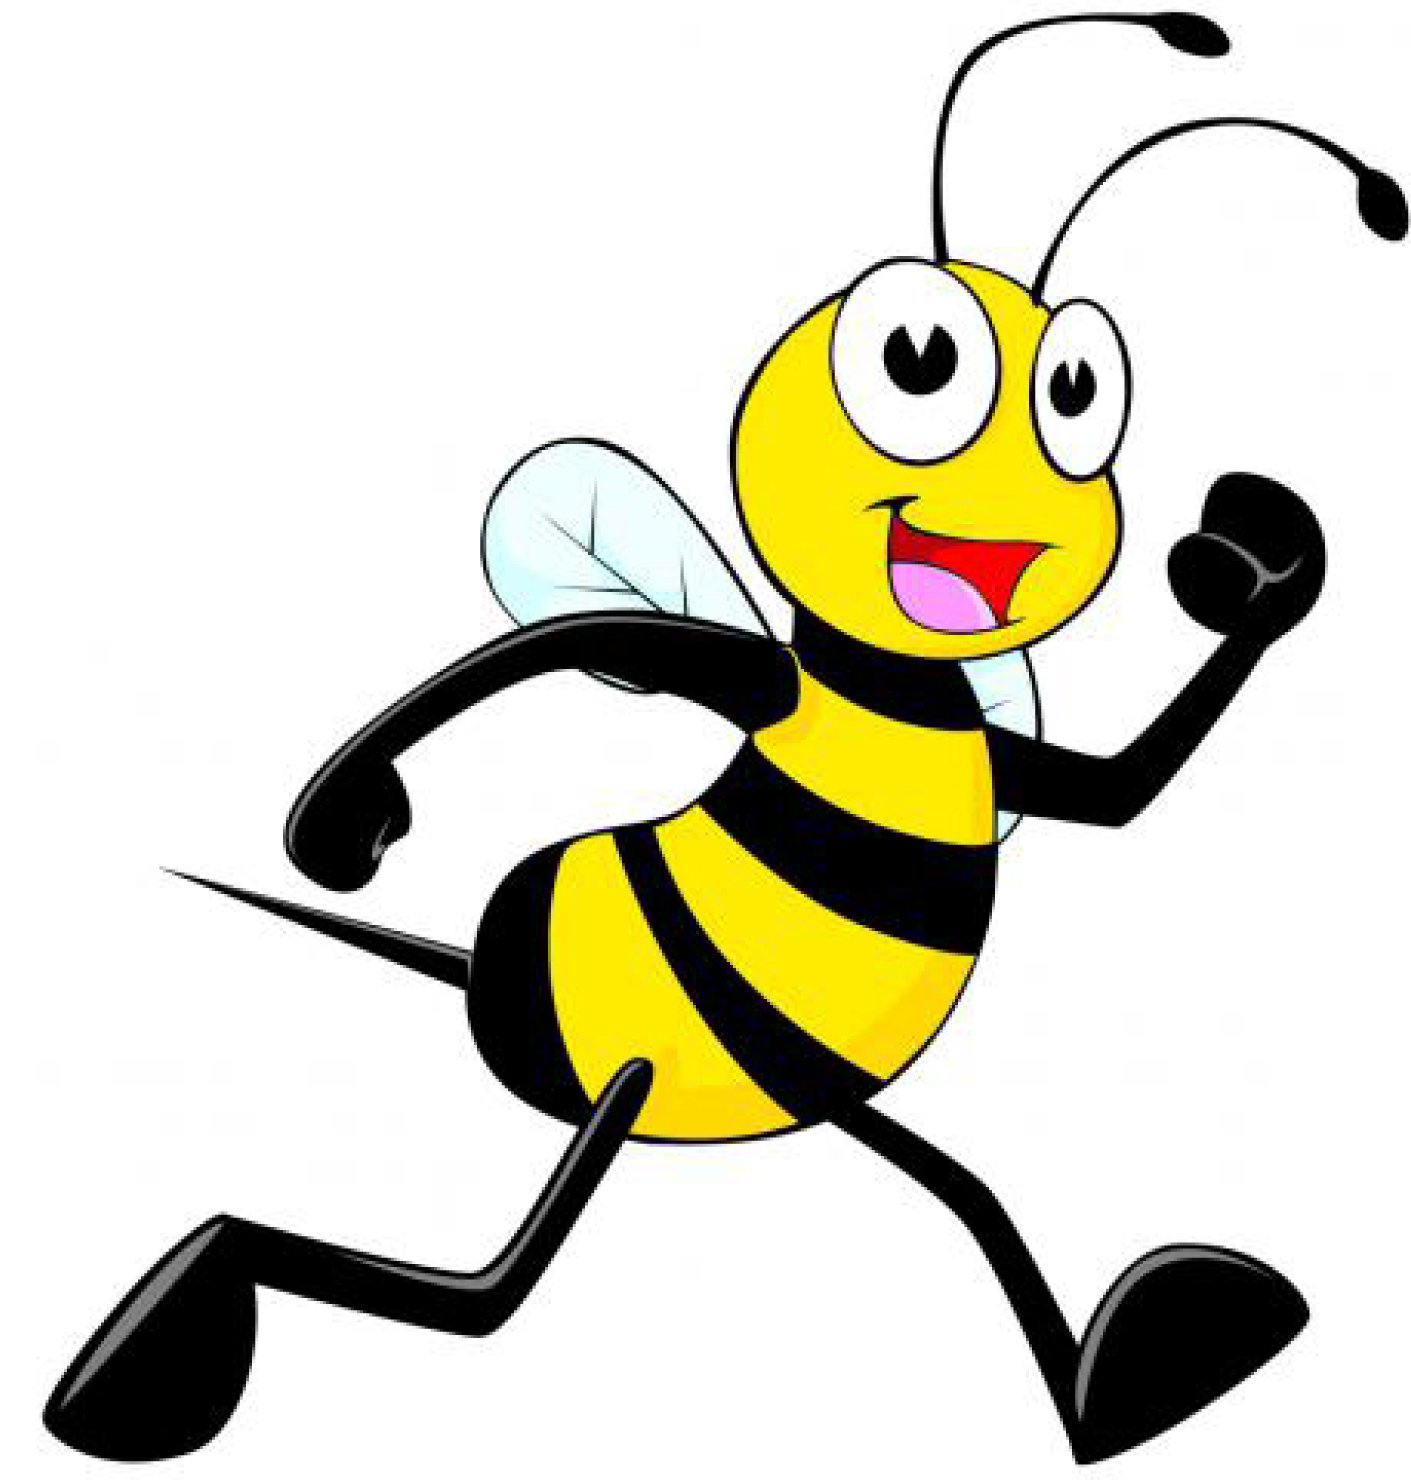 Busy bee photo